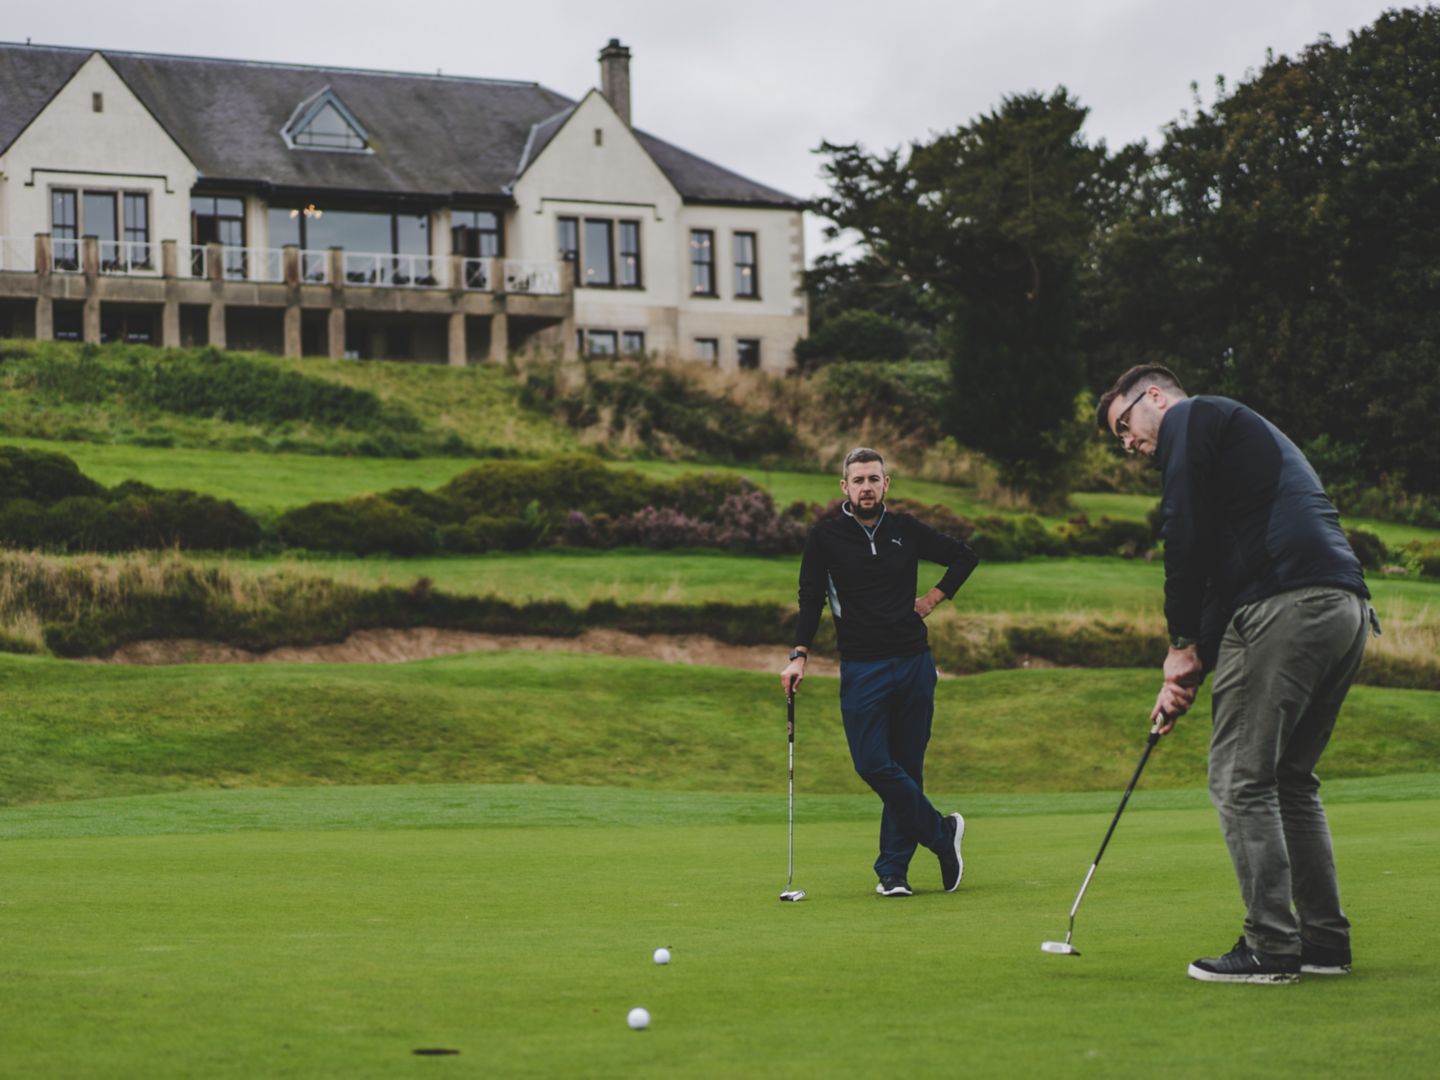 Golf Club Rental St Andrews - Golfing To You - Club & Equipment Hire